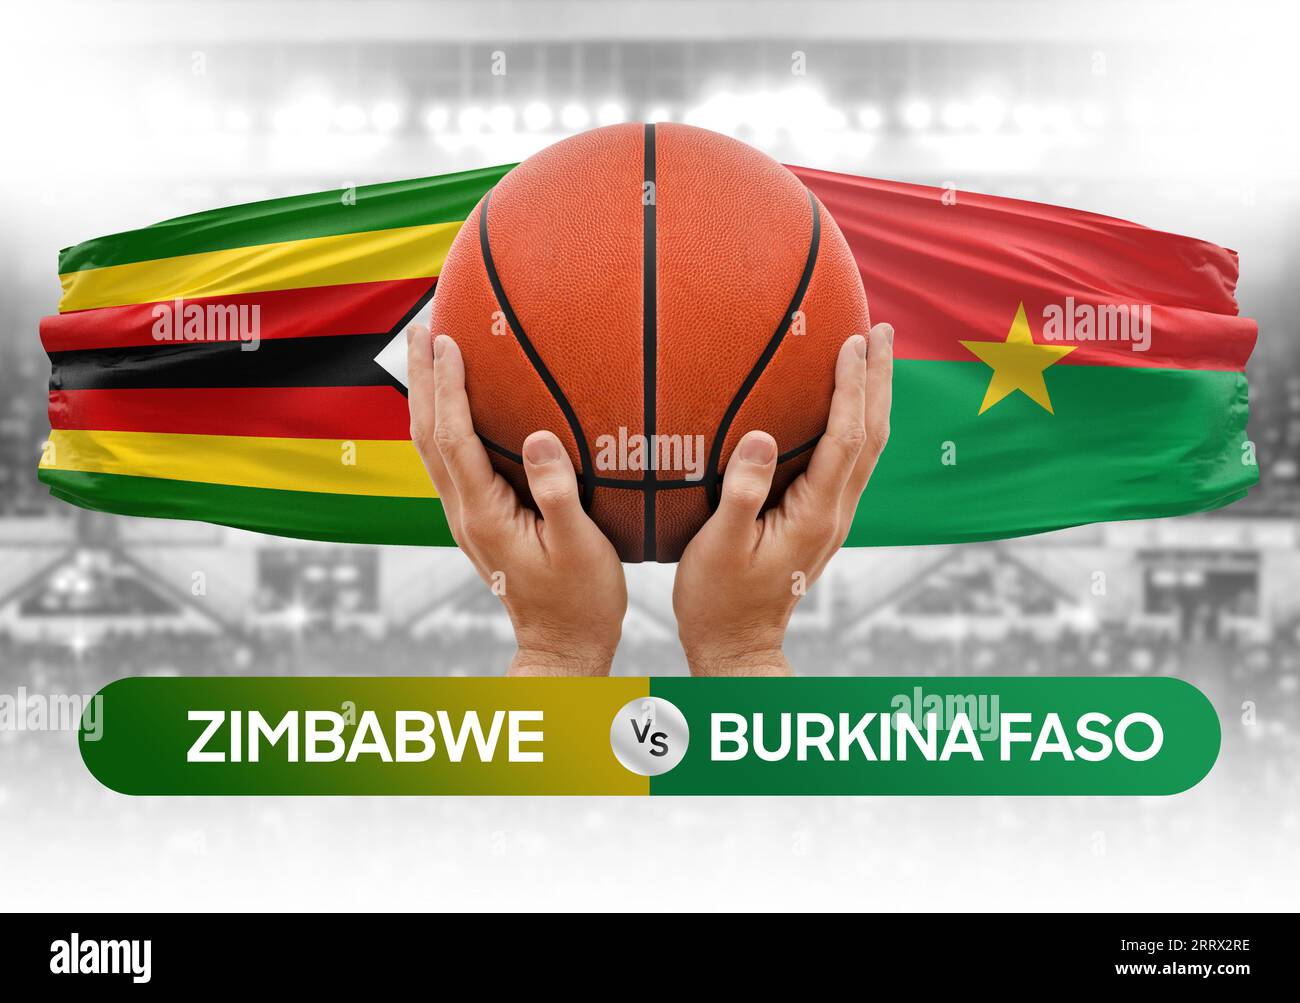 Zimbabwe vs Burkina Faso national basketball teams basket ball match competition cup concept image Stock Photo